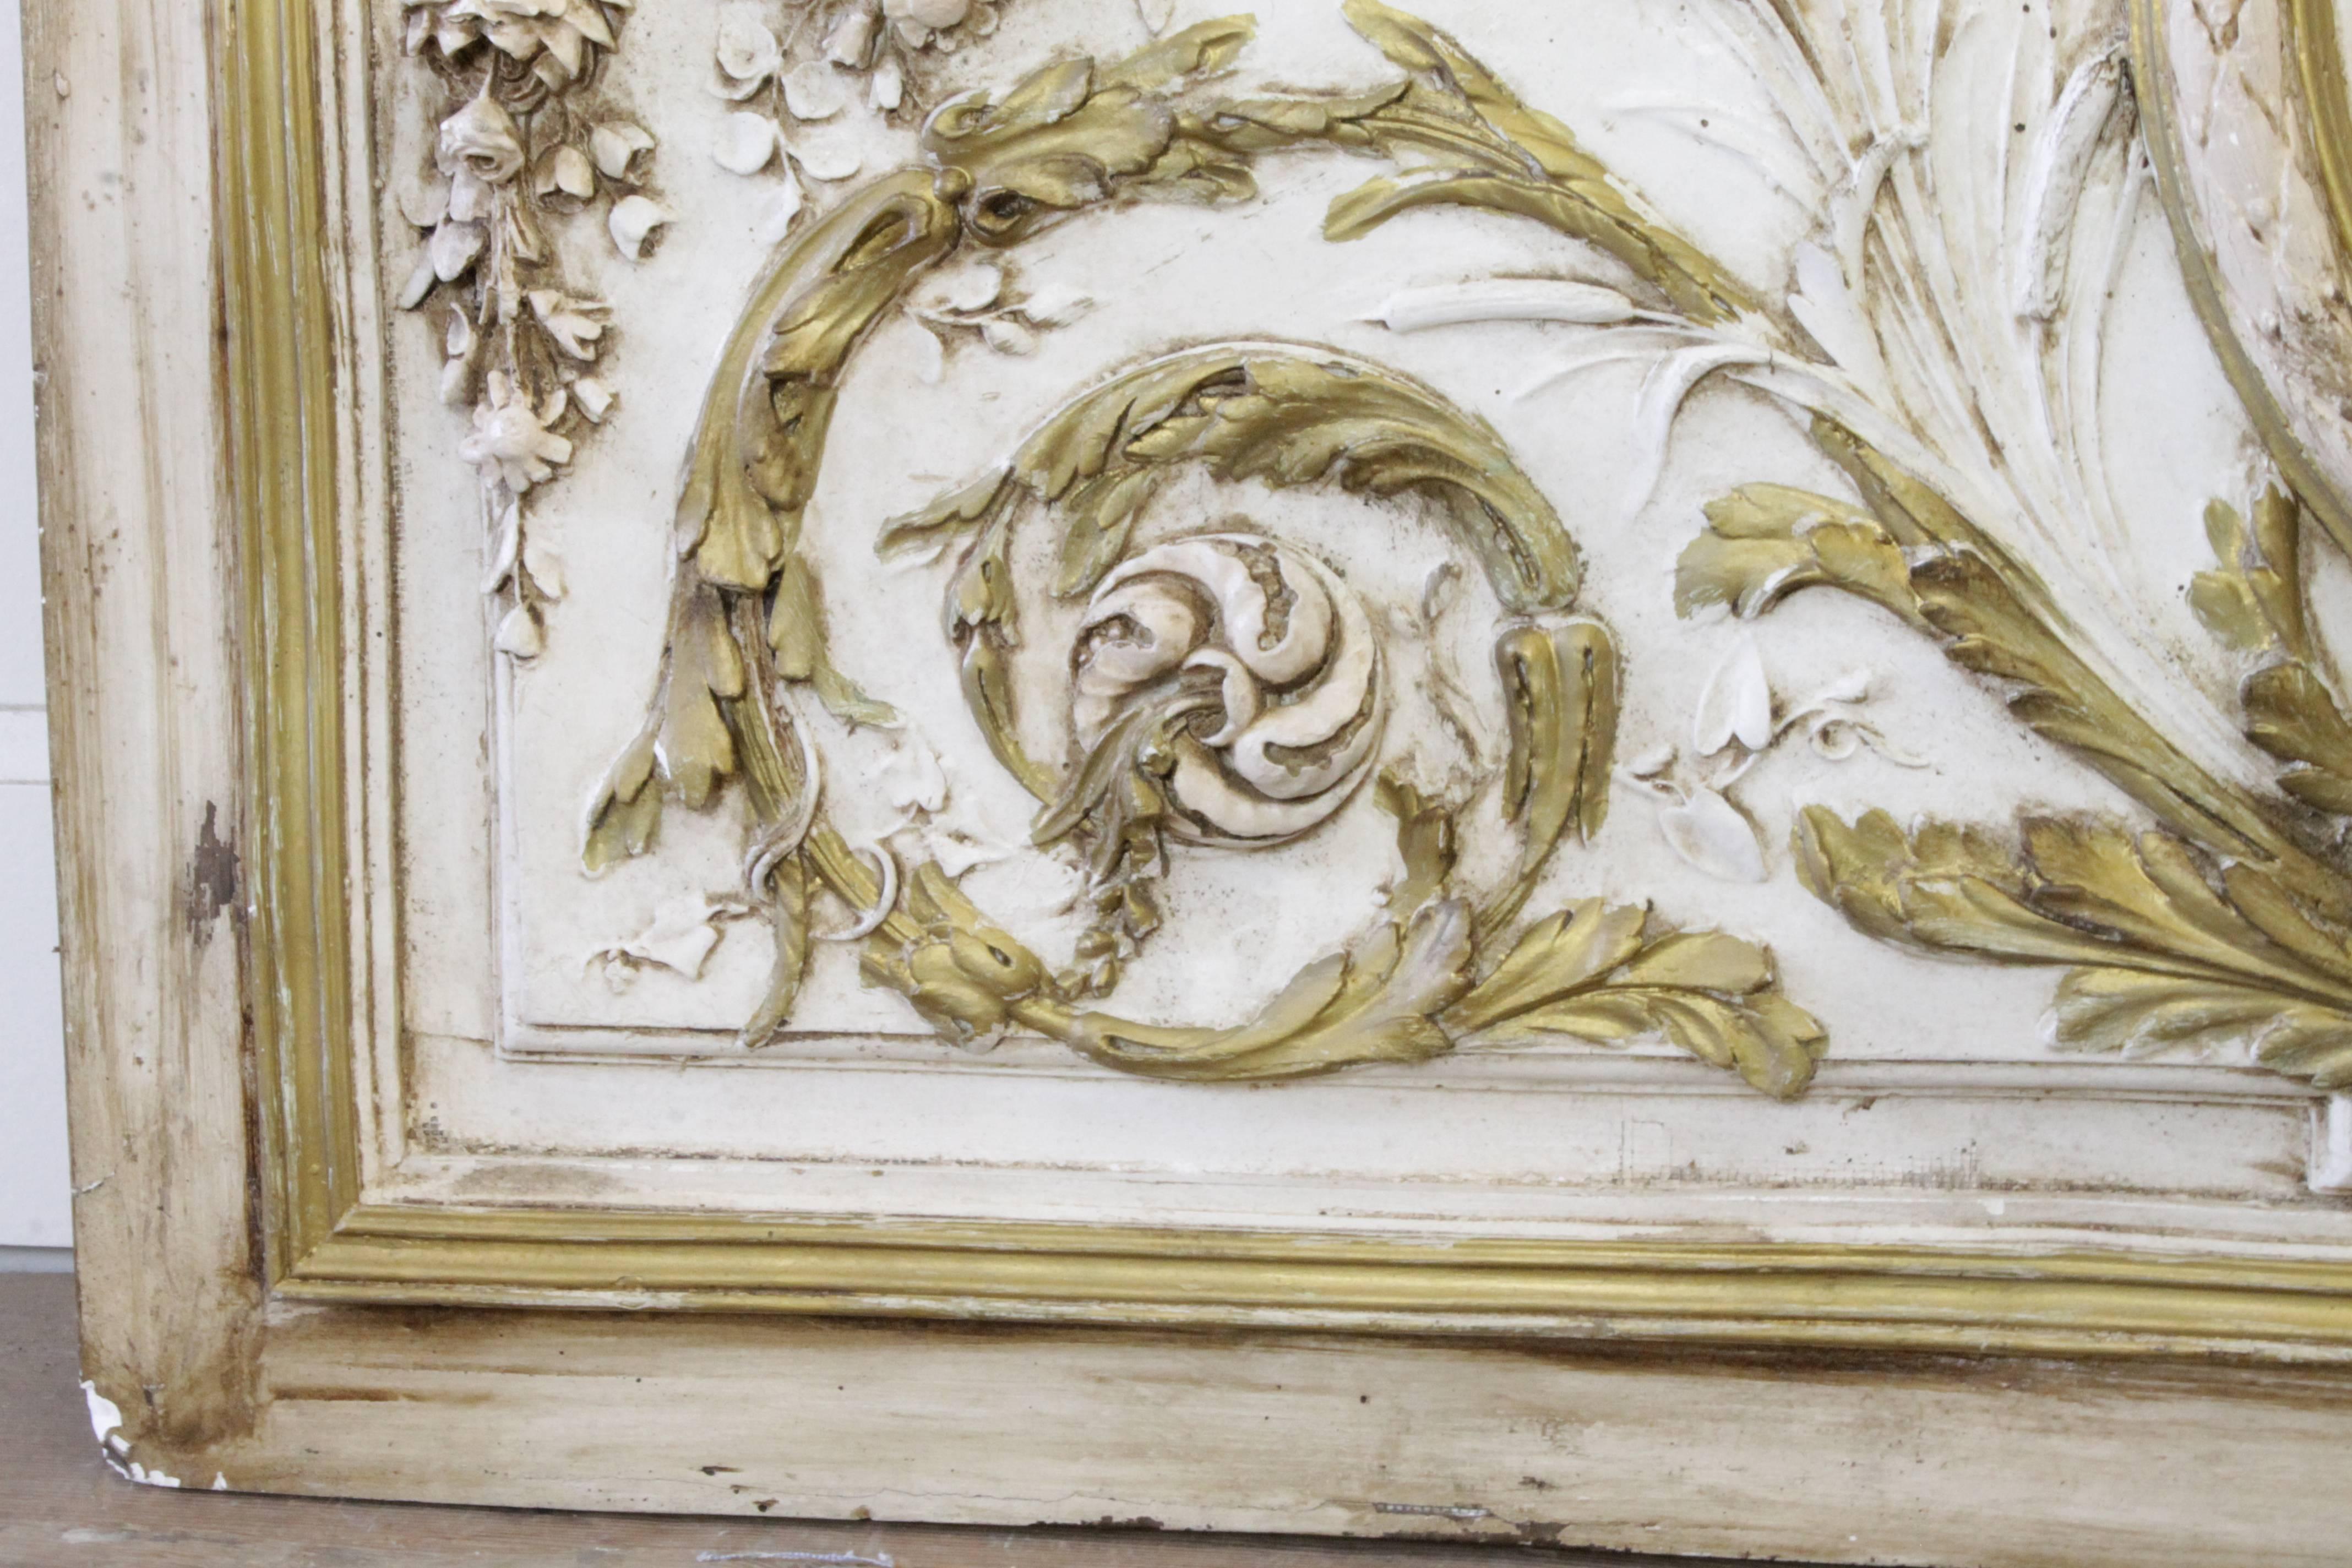 Carved 19th Century Cherub with Rose Swag Overdoor Decorative Panel